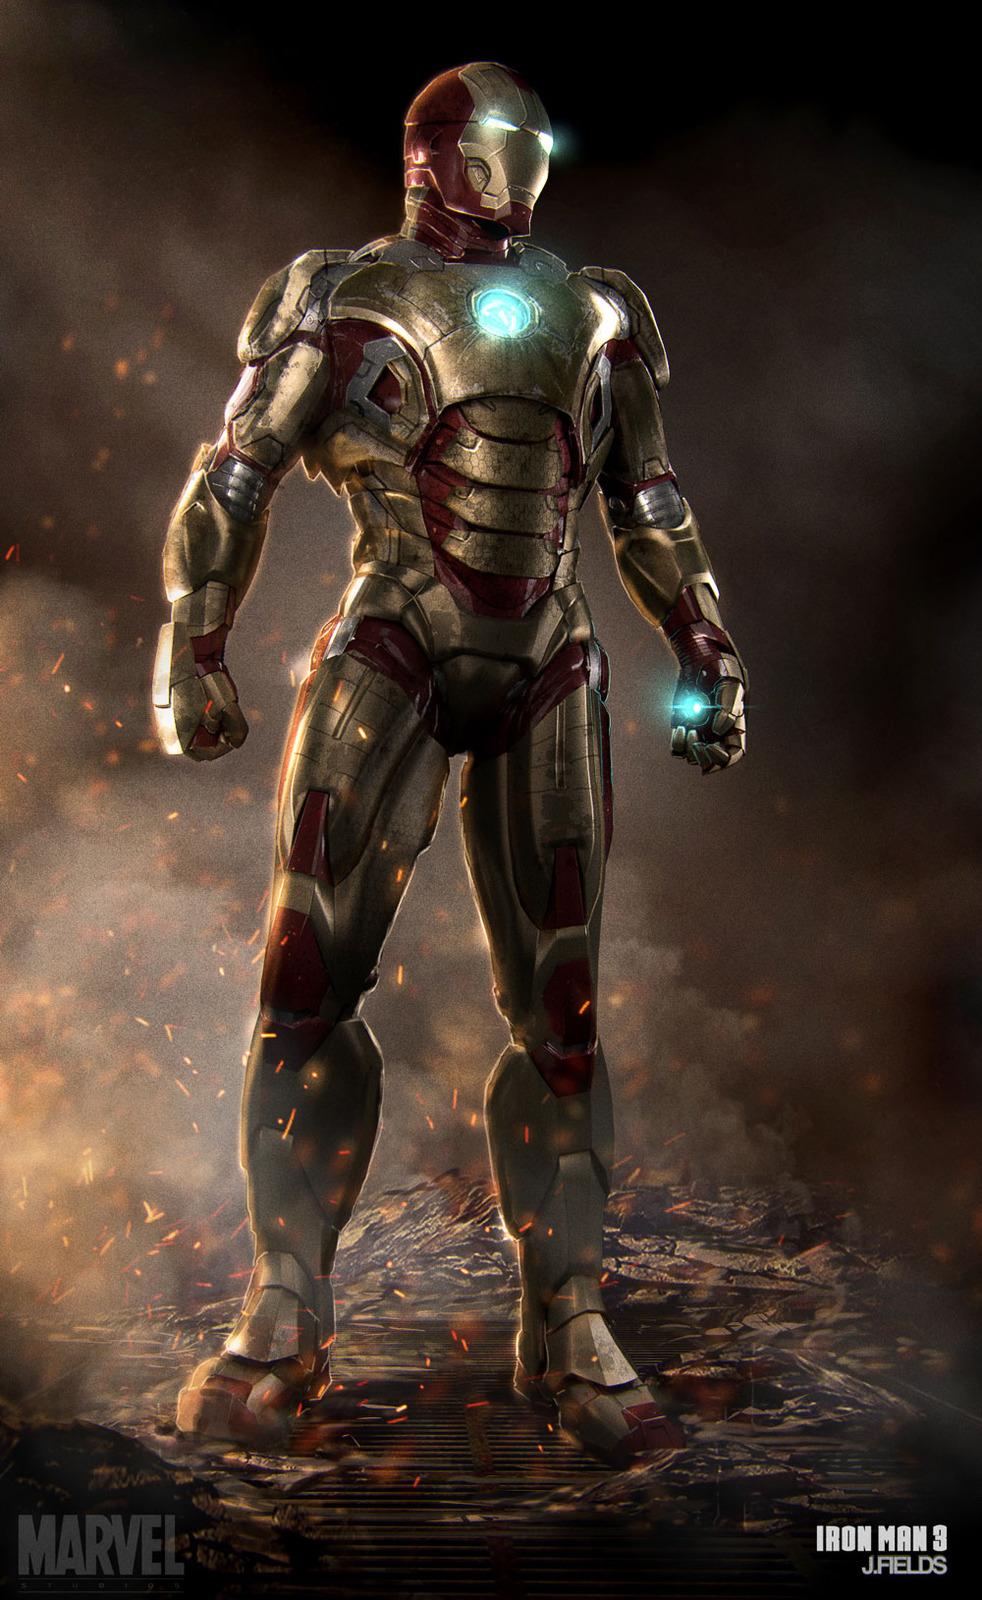 Iron Man 3 Armor Concept Art (id: 65378)